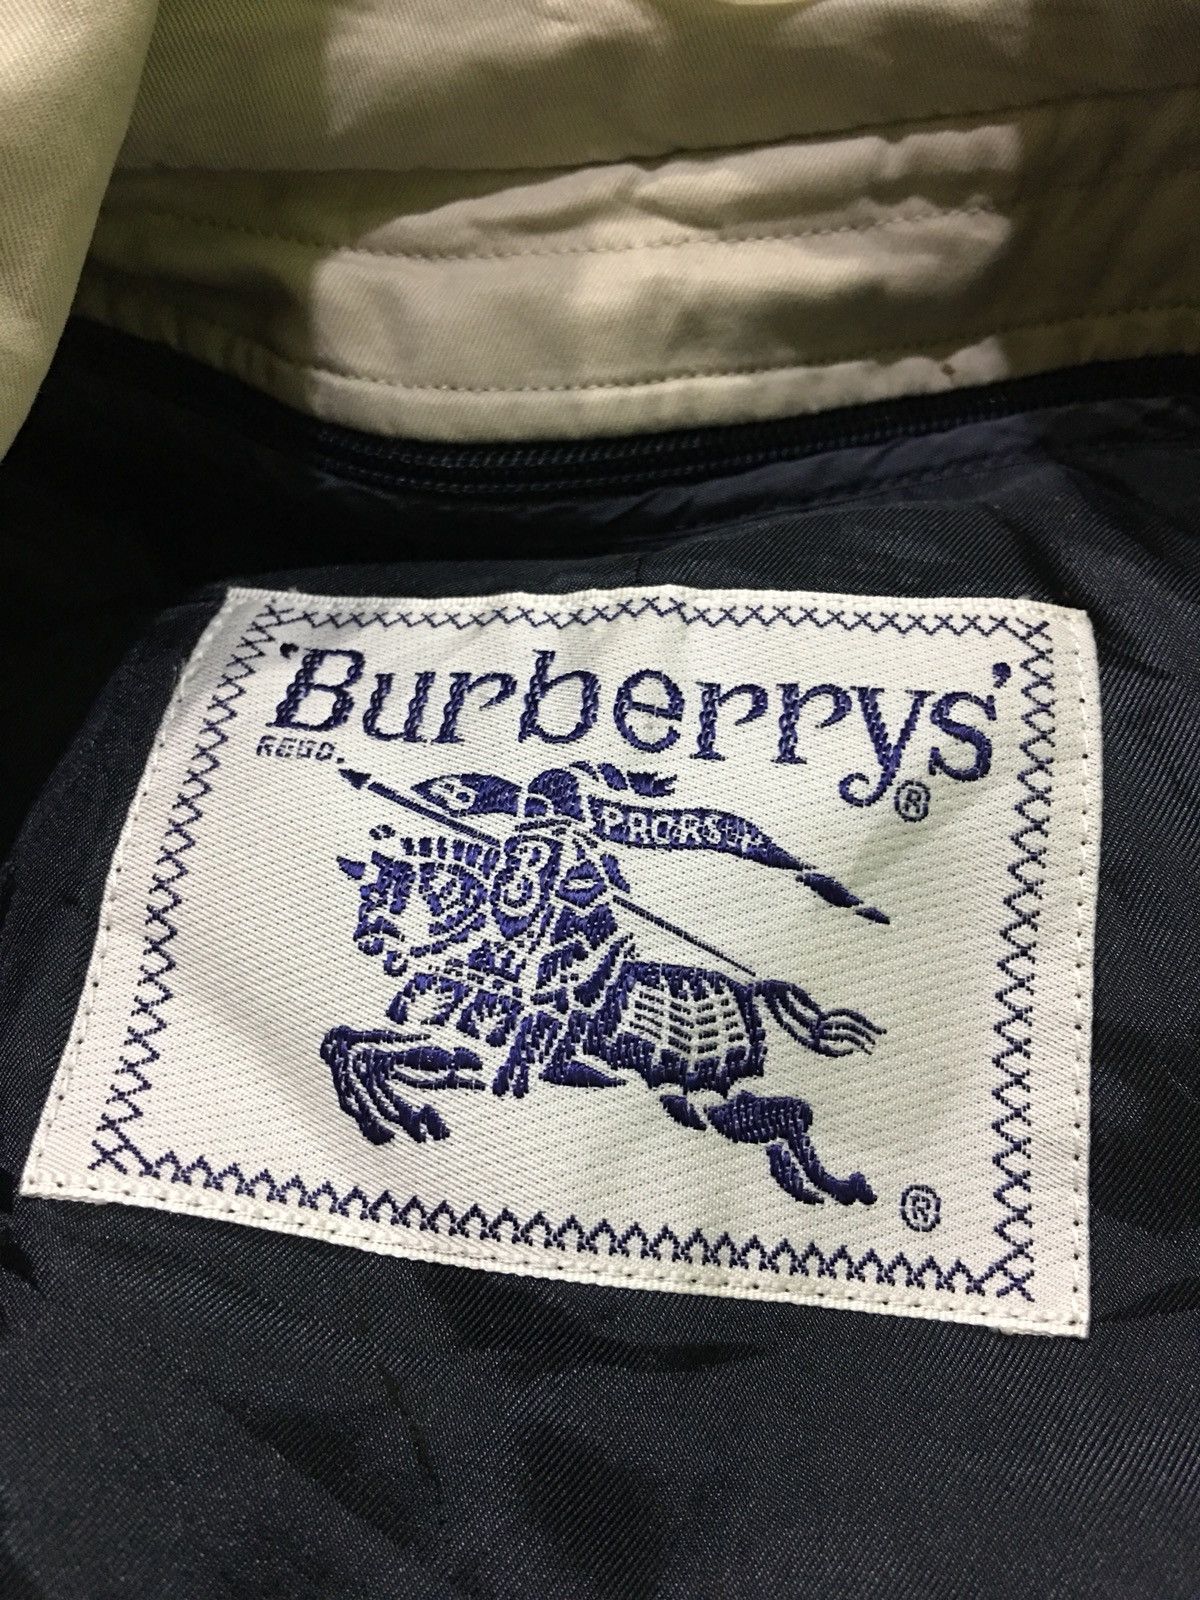 Burberry Vintage Burberrys Nova Check Plaid Tartan Long Coat / Parka Size US M / EU 48-50 / 2 - 4 Thumbnail